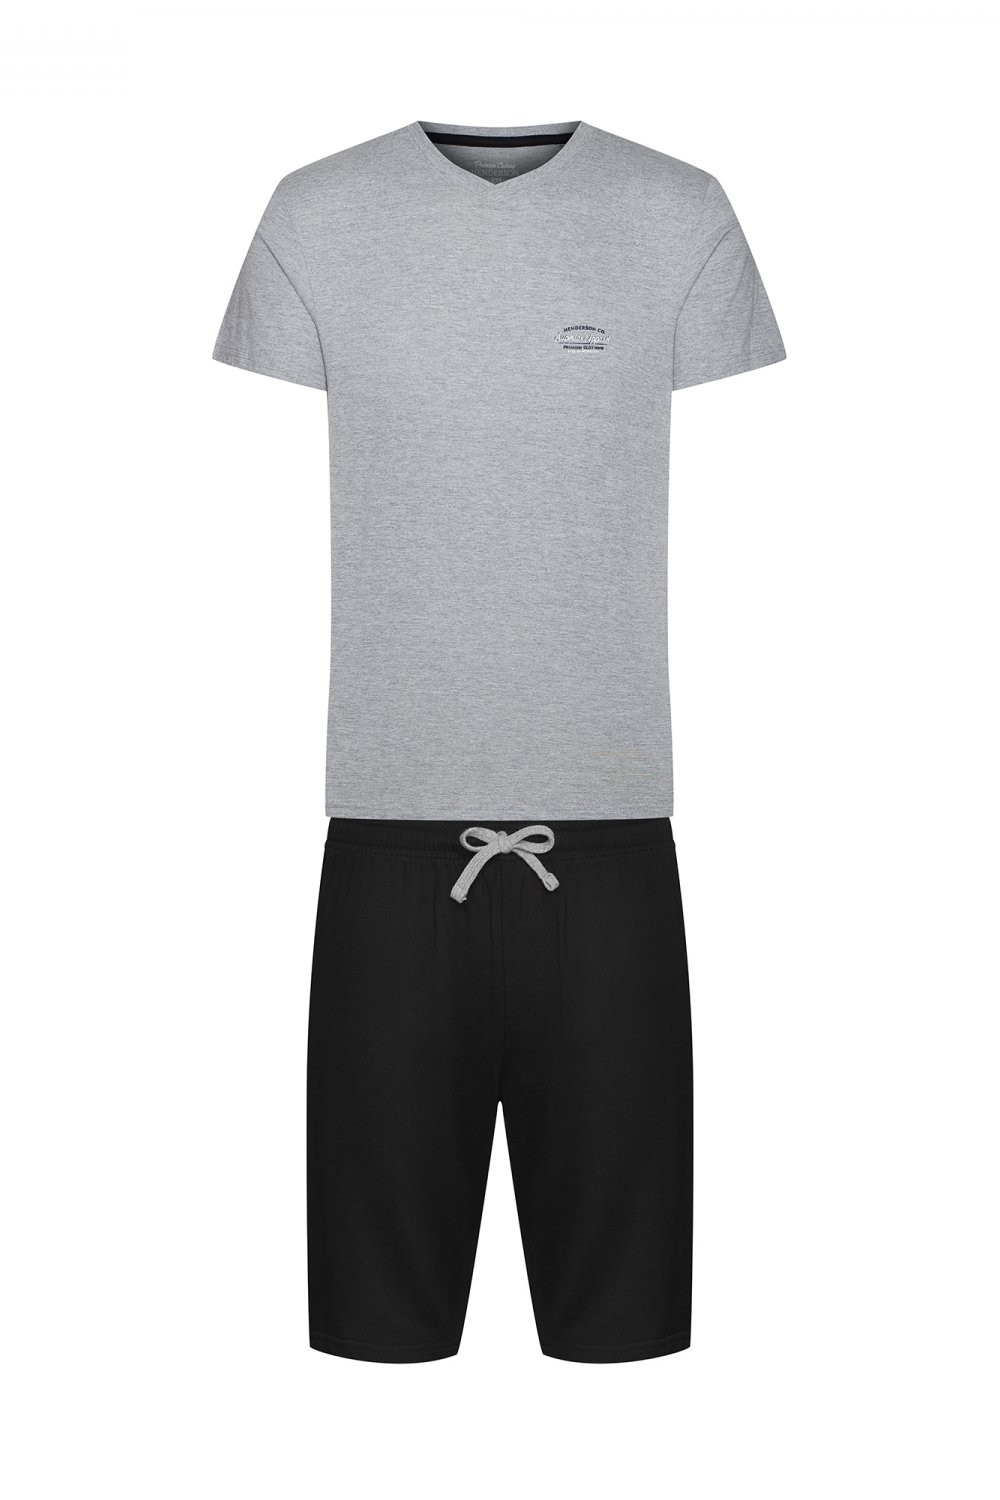 Pánské pyžamo grey model 16302743 - Henderson Barva: šedá, Velikost: L